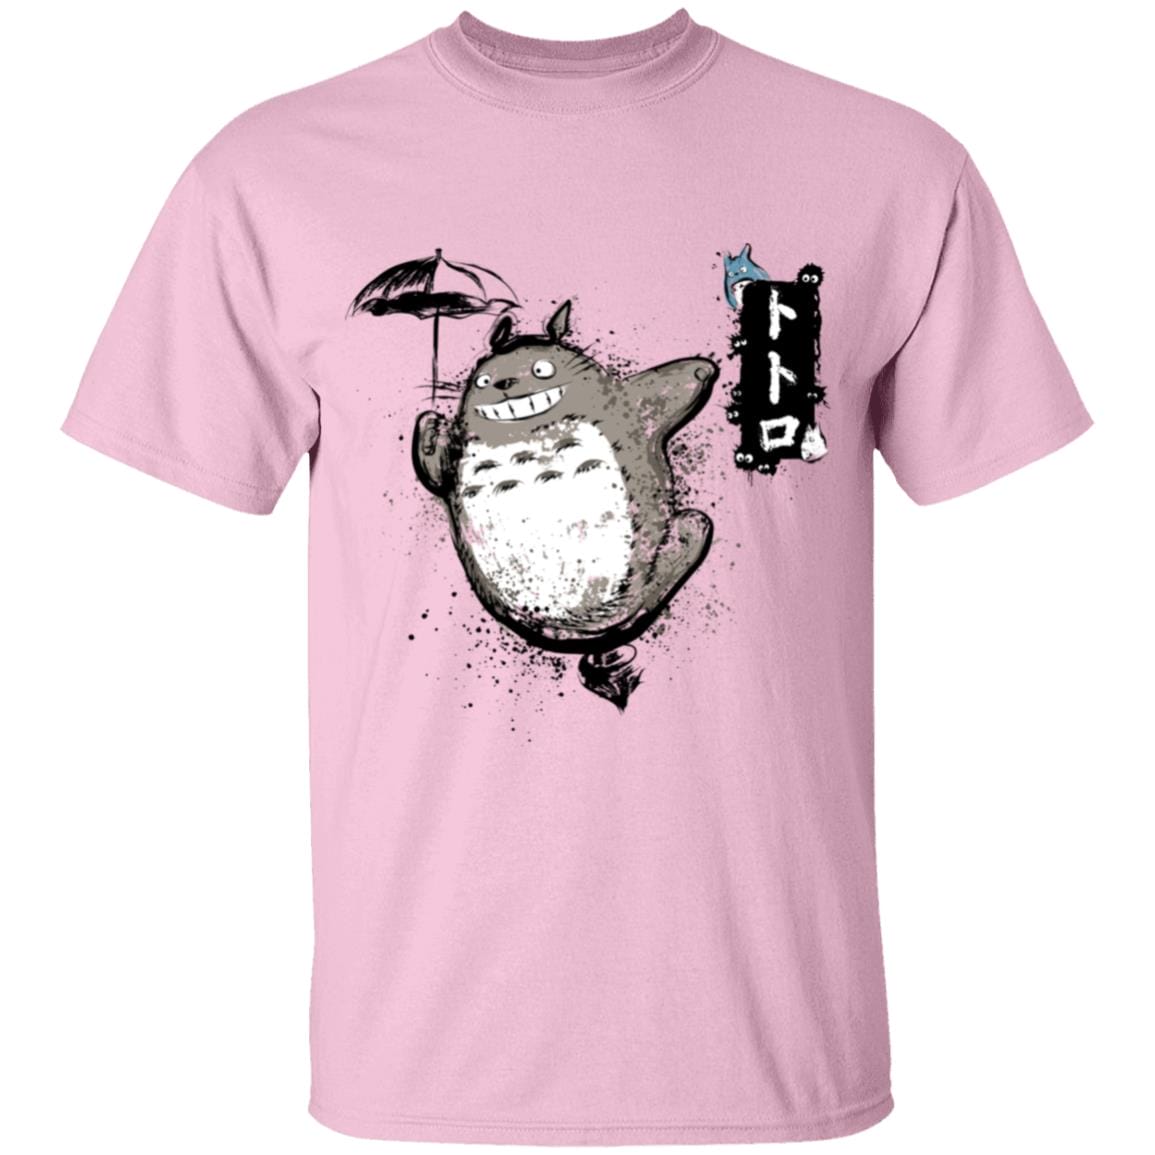 Spinning Totoro Kid T Shirt